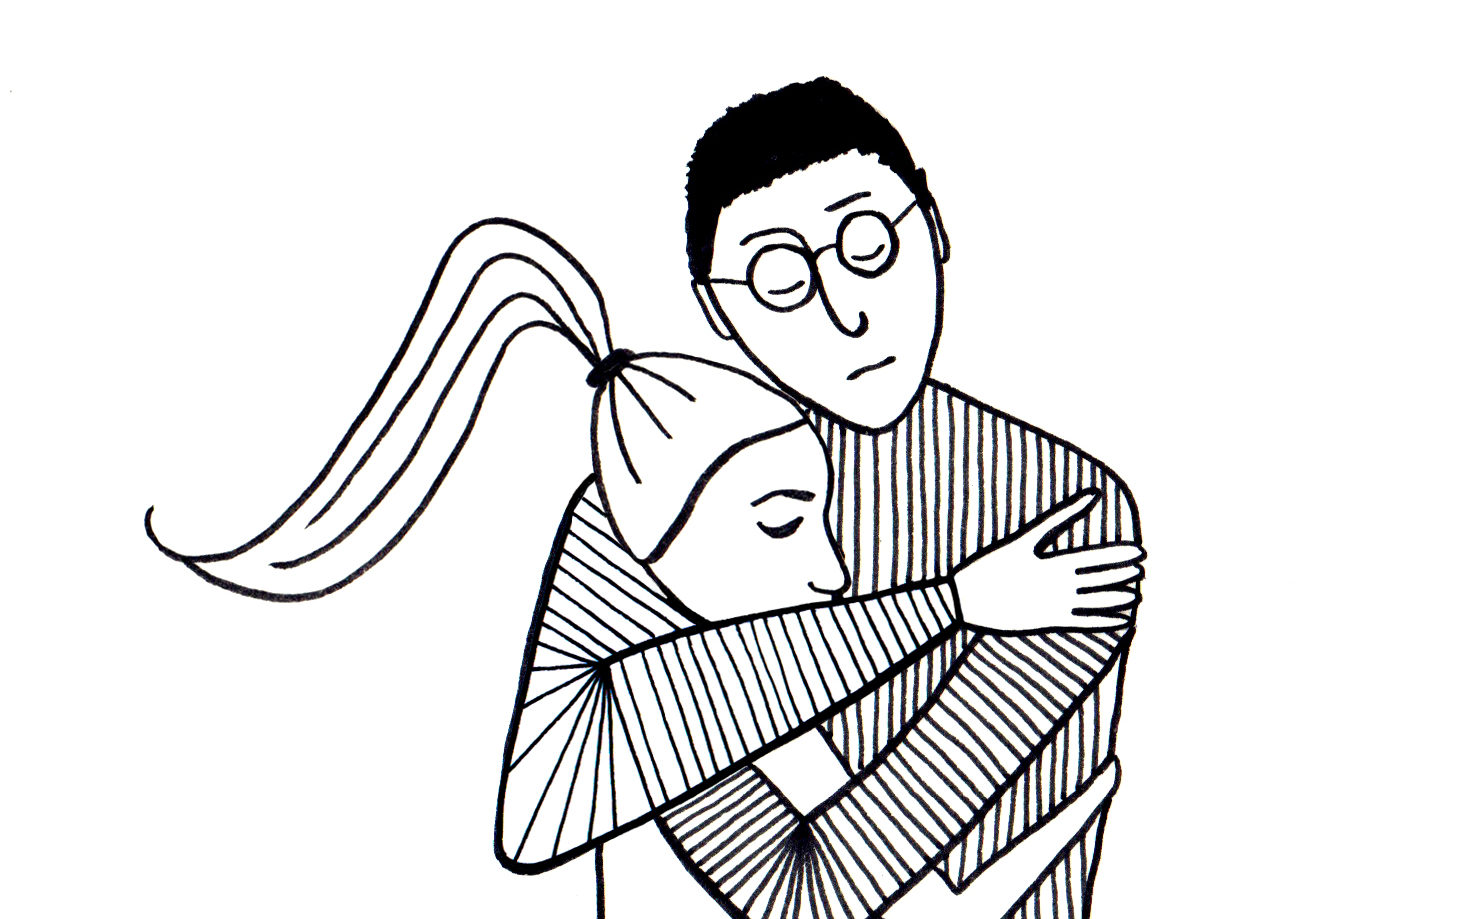 Hugging Em, an illustration from Mark Simmonds' book